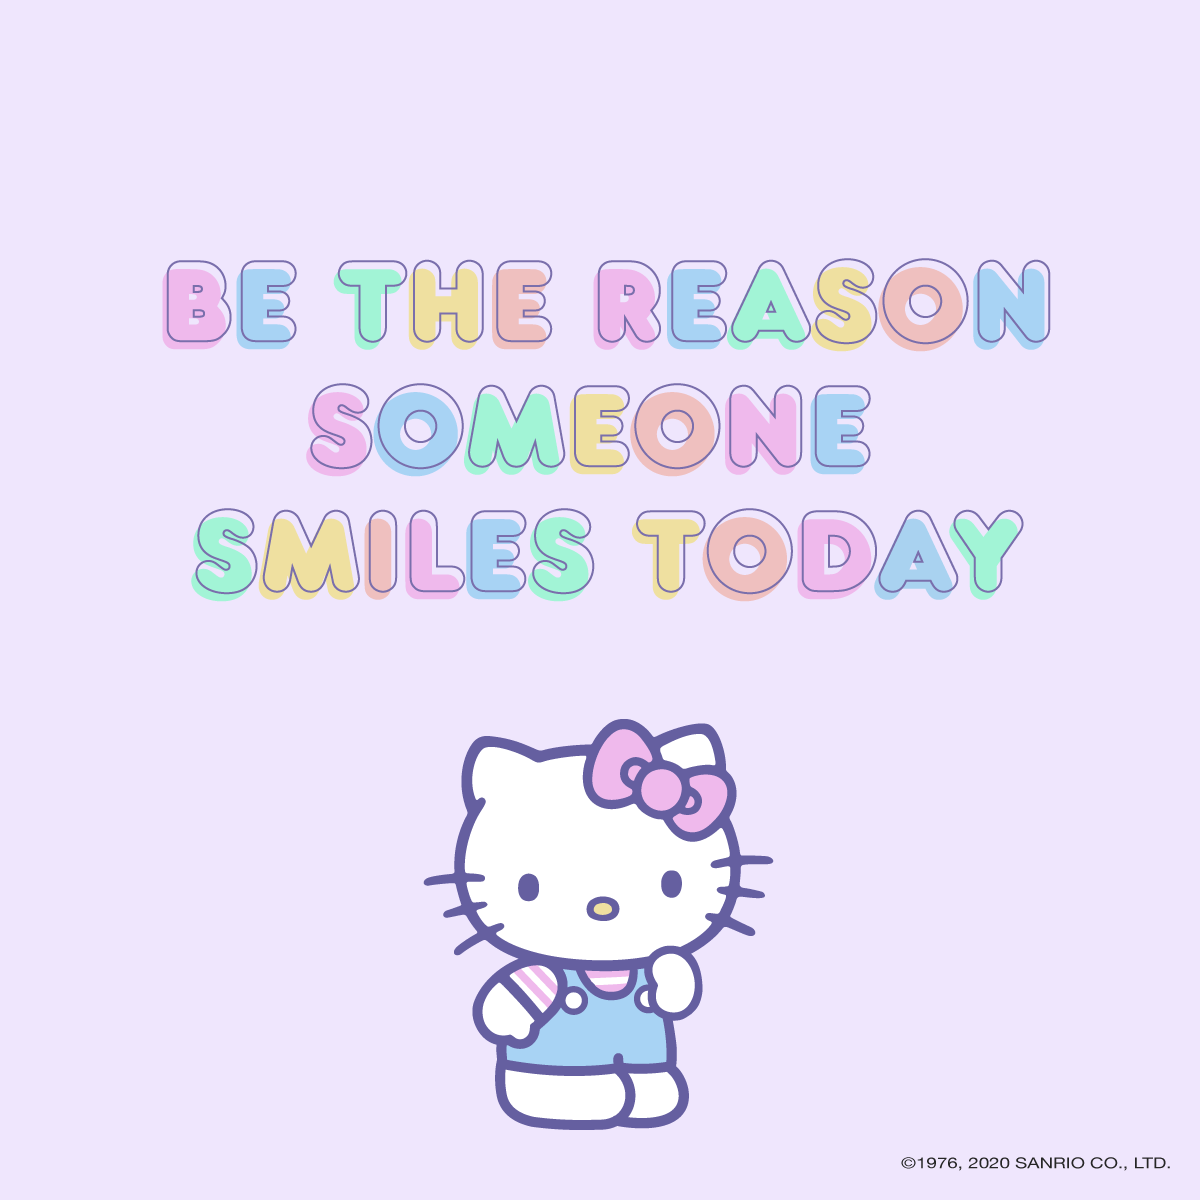 Be The Reason Someone Smiles Today. Hello kitty wallpaper, Sanrio hello kitty, Hello kitty coloring